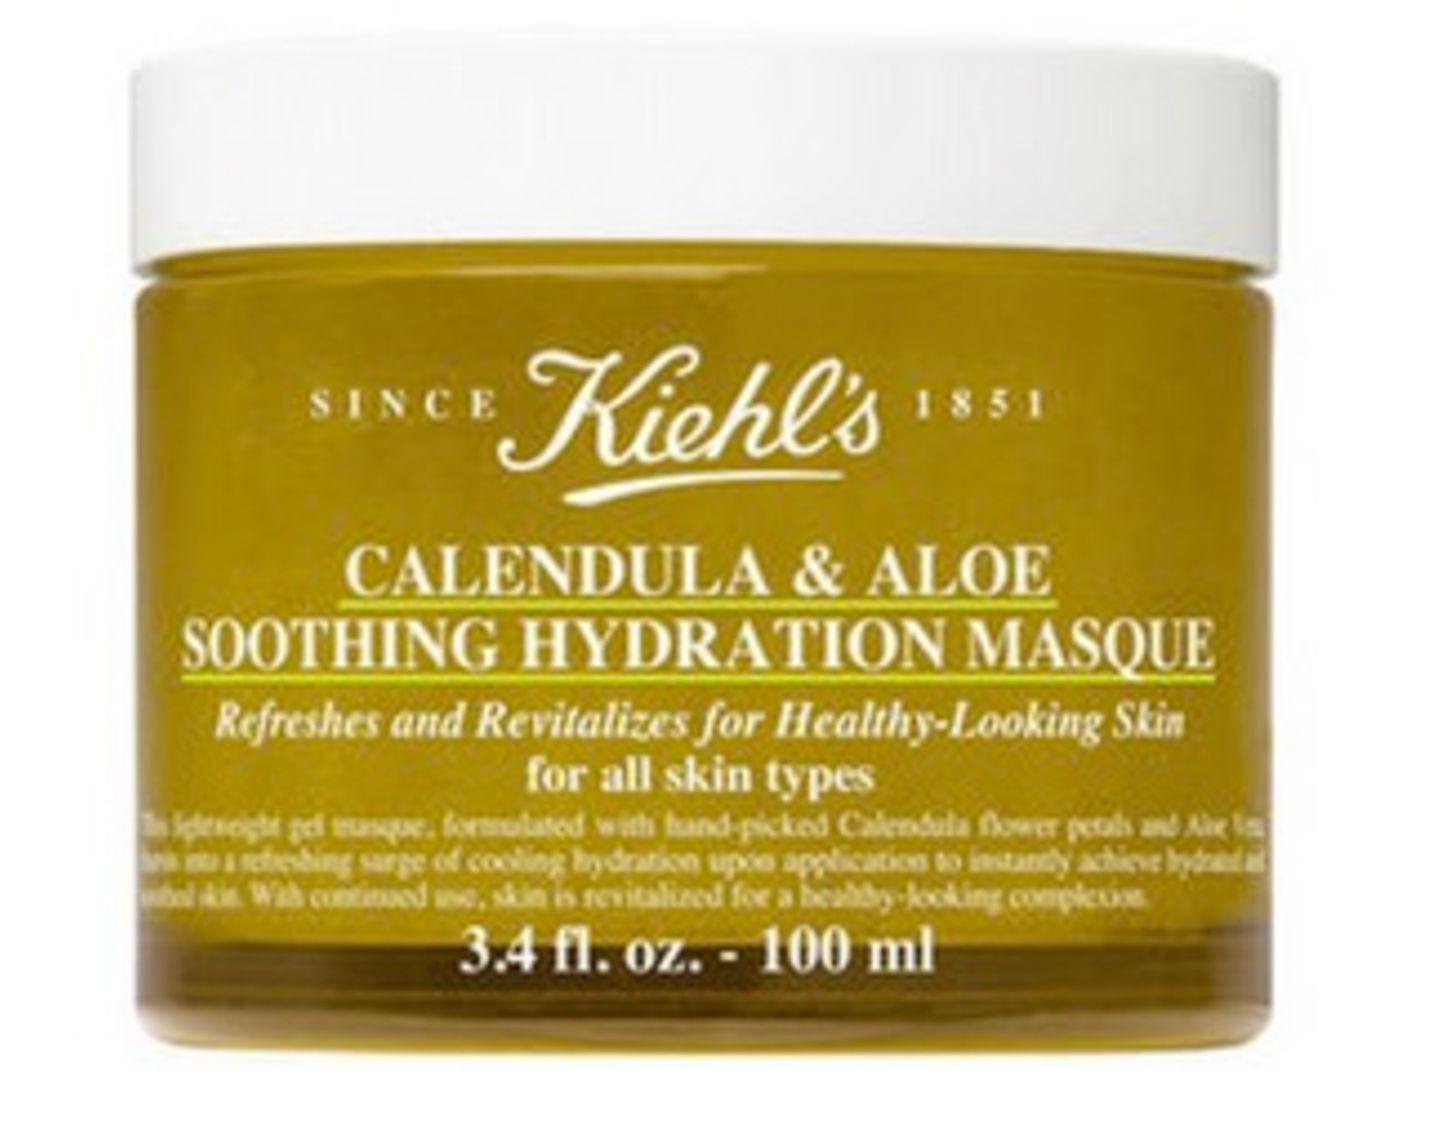 "Calendula & Aloe Soothing Hydration" von Kiehl's